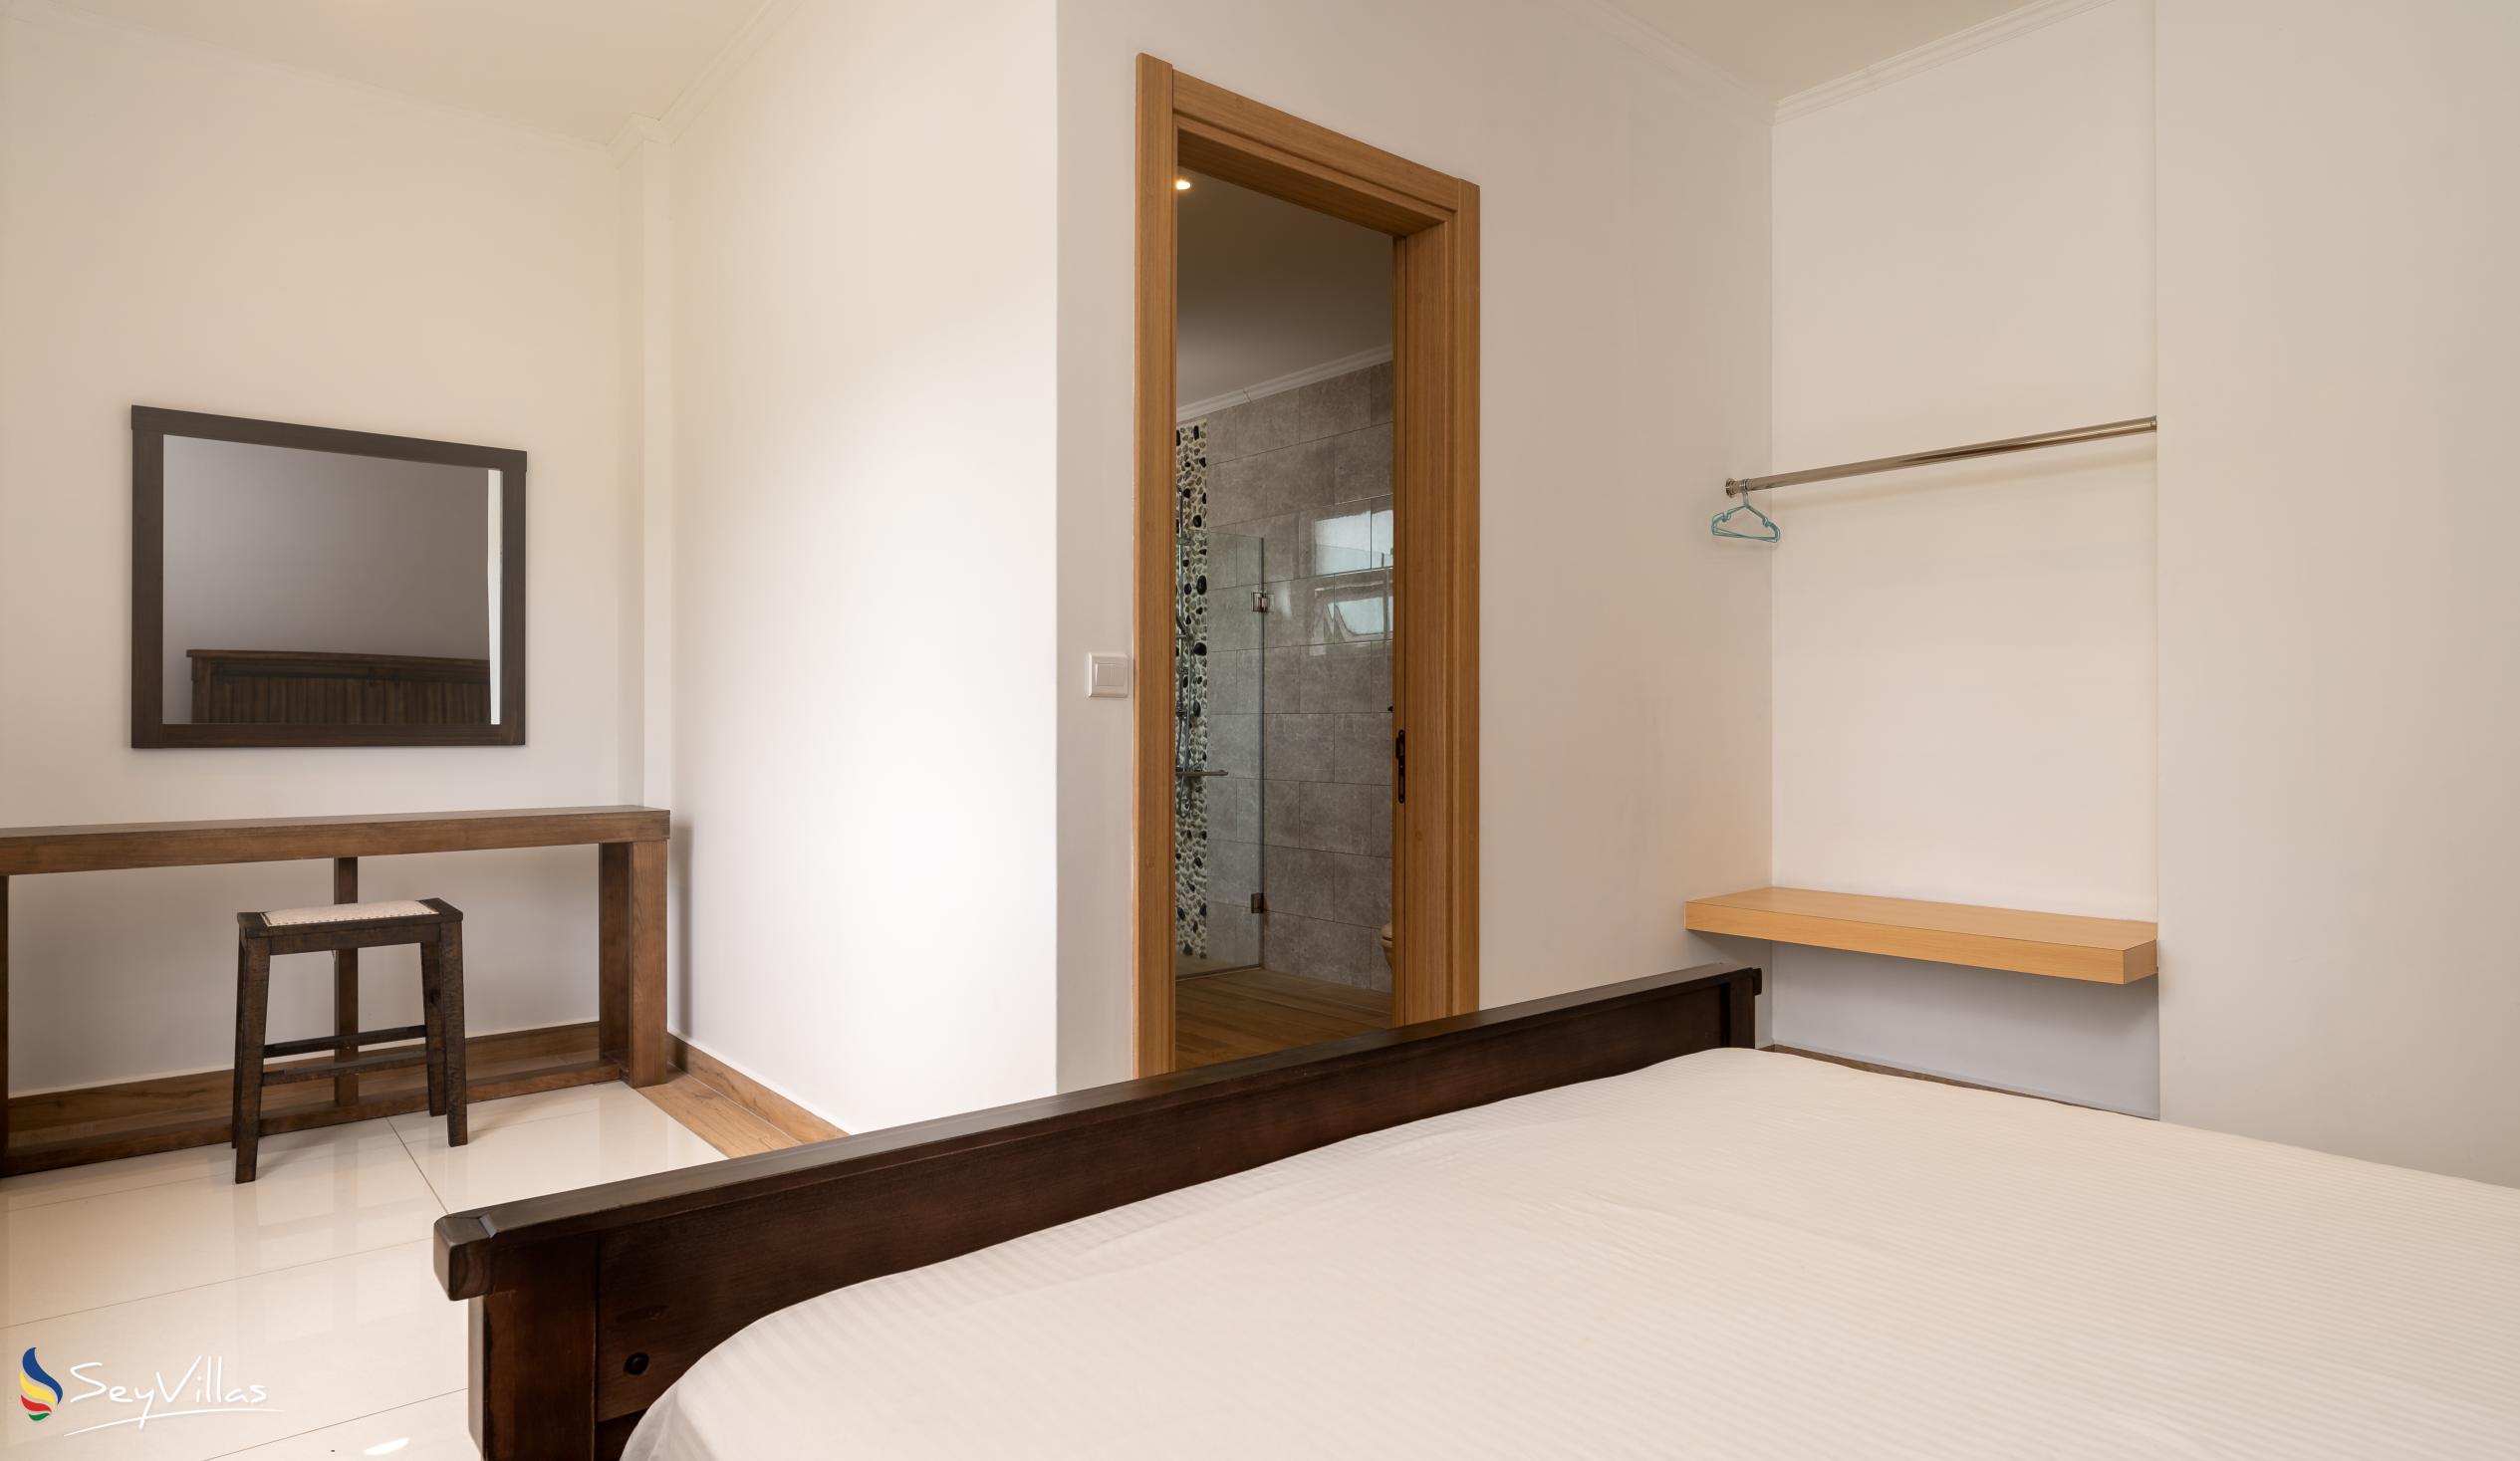 Foto 34: Royale Suites by Arc Royale Luxury Apartments - Appartamento con 2 camere - Mahé (Seychelles)